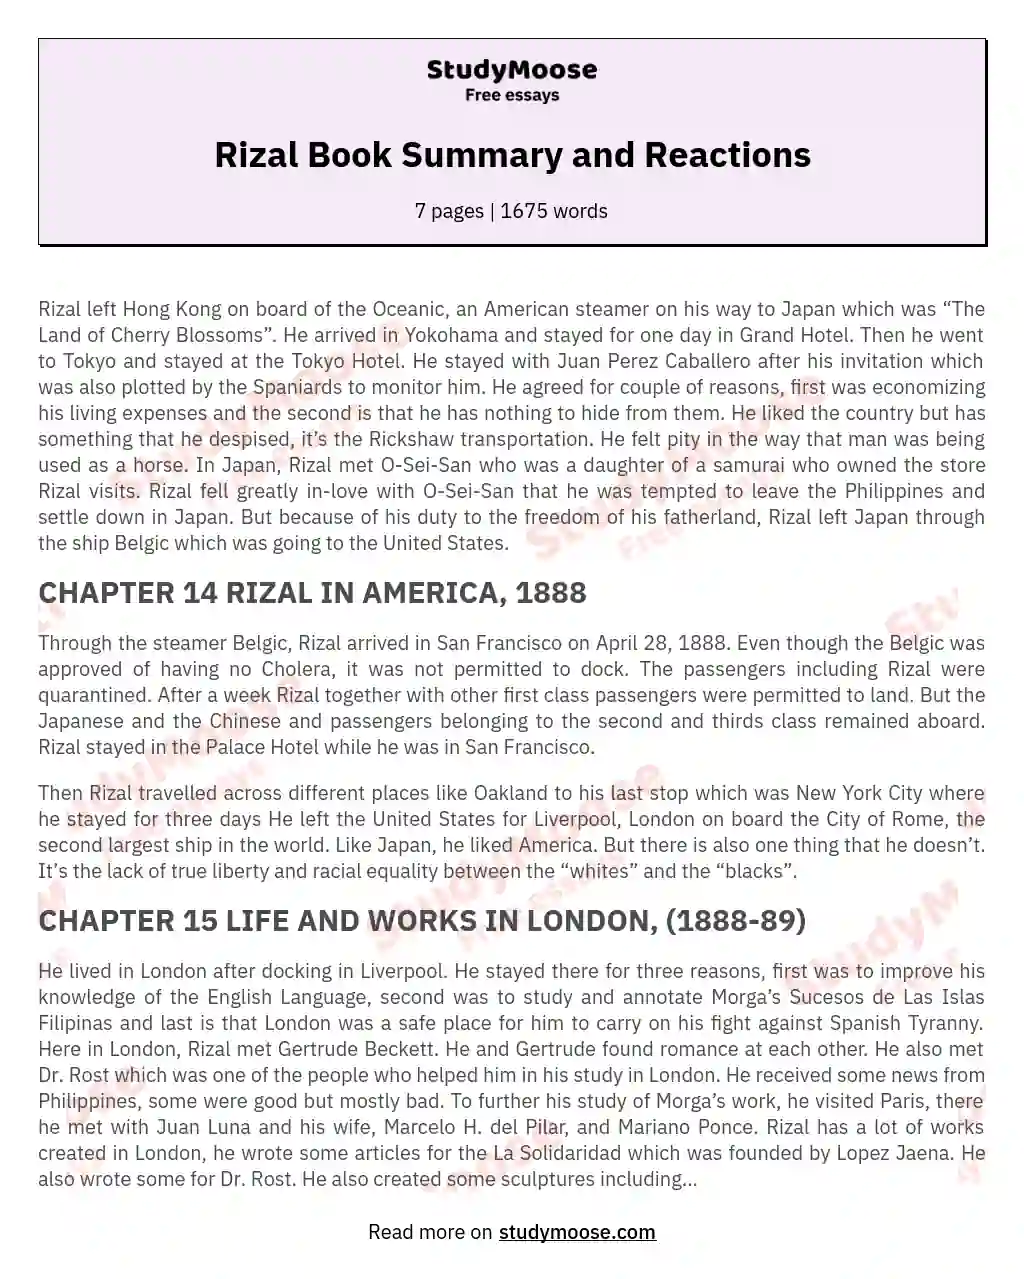 Rizal Book Summary and Reactions essay